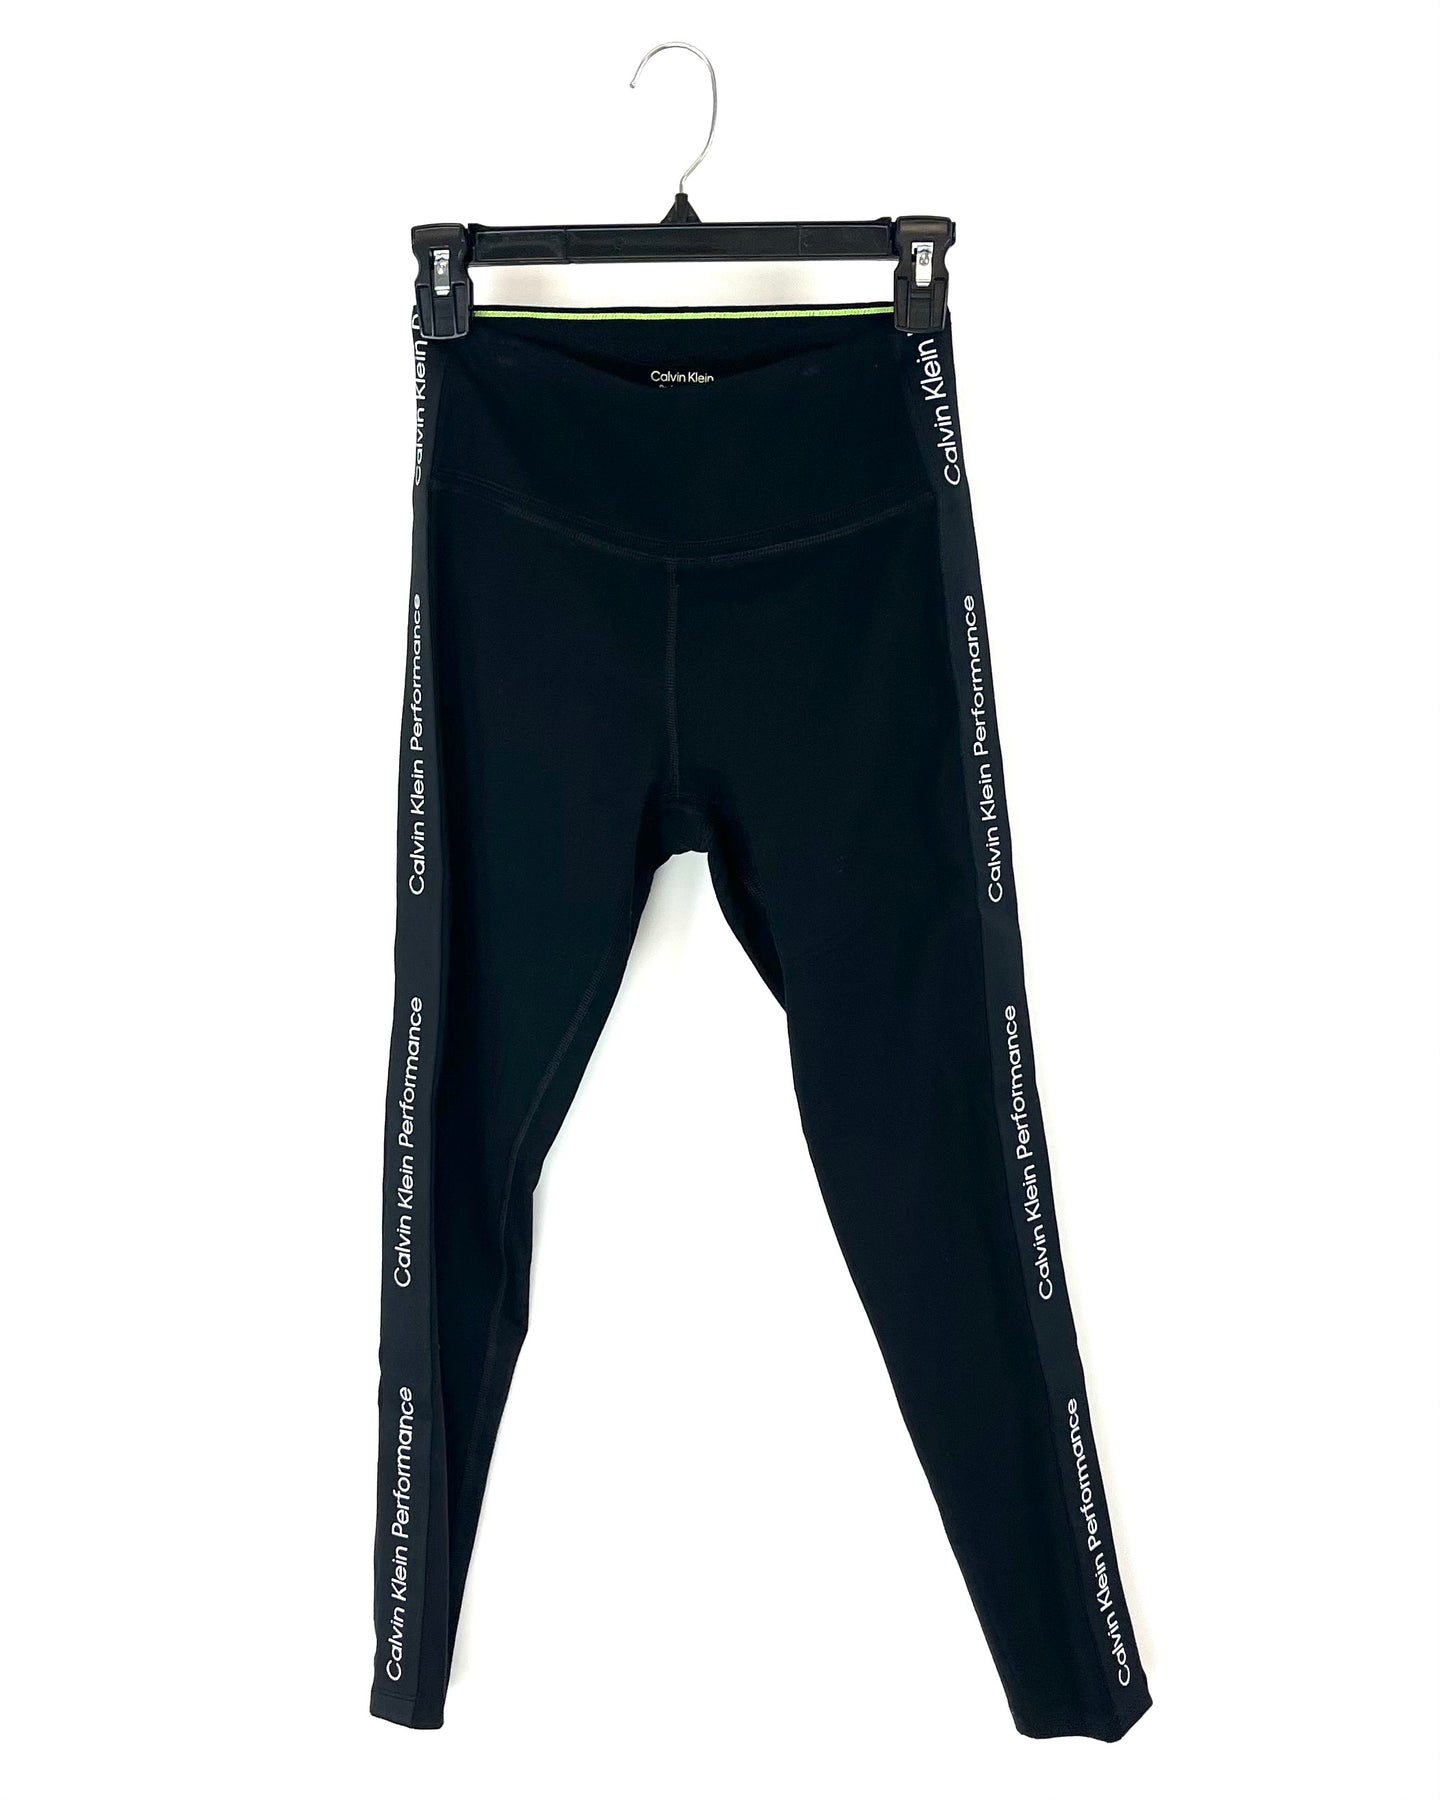 Calvin Klein Performance Black Leggings with Logo - Small – The